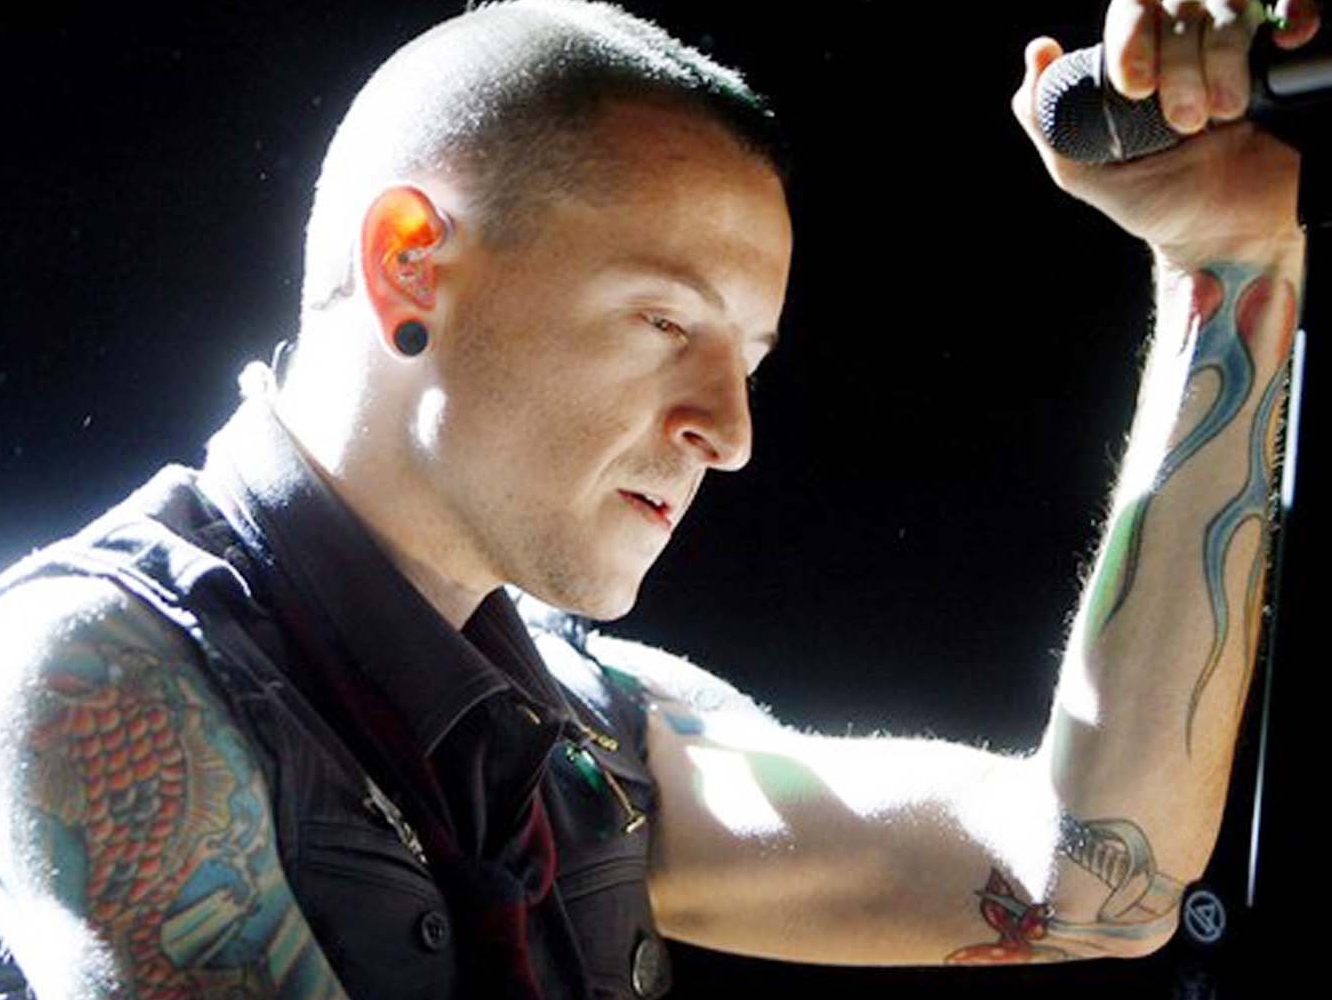  Encuentran muerto a Chester Bennington, vocalista de Linkin Park